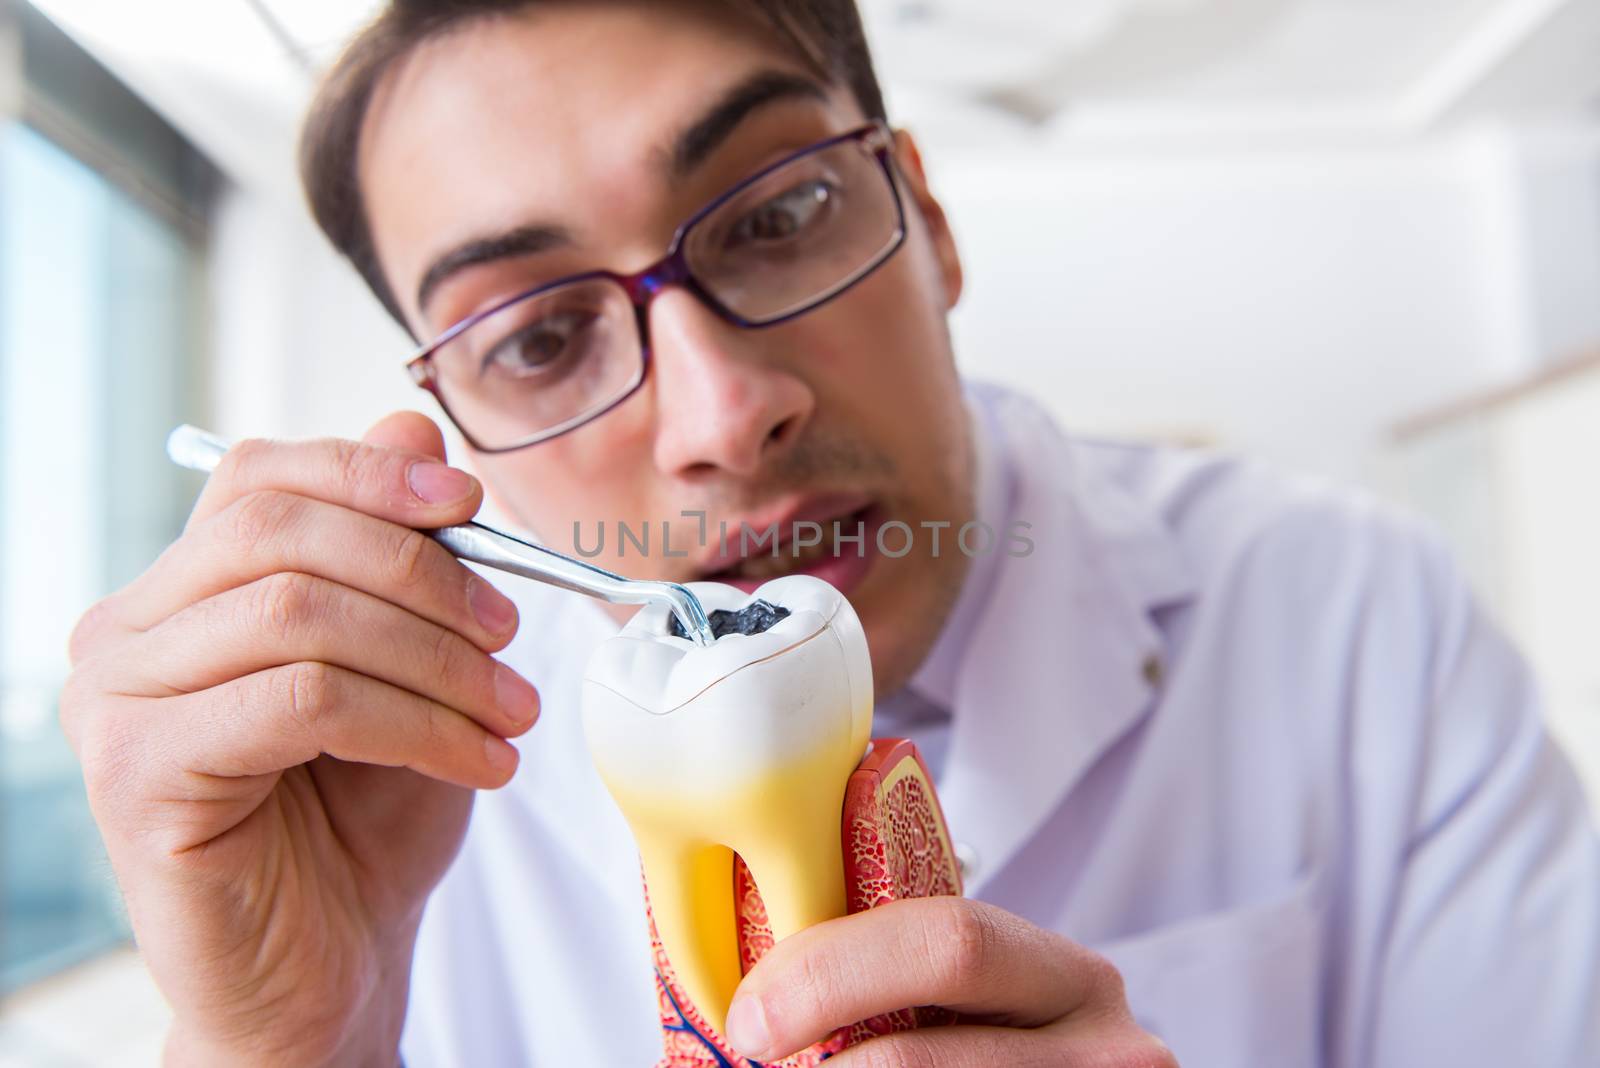 Dentist in medical concept in hospital